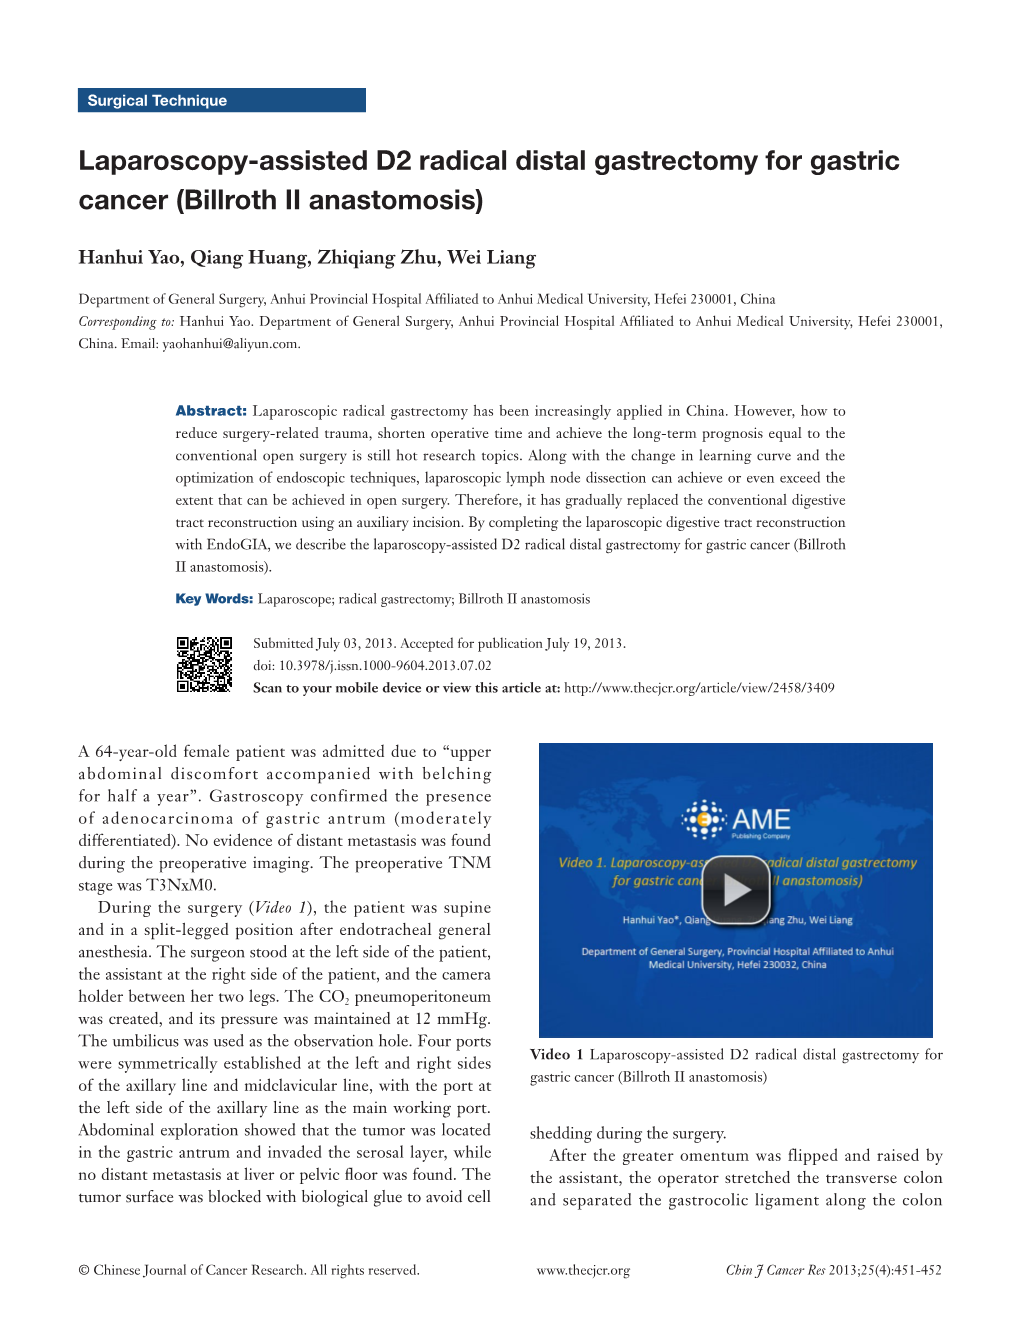 Laparoscopy-Assisted D2 Radical Distal Gastrectomy for Gastric Cancer (Billroth II Anastomosis)